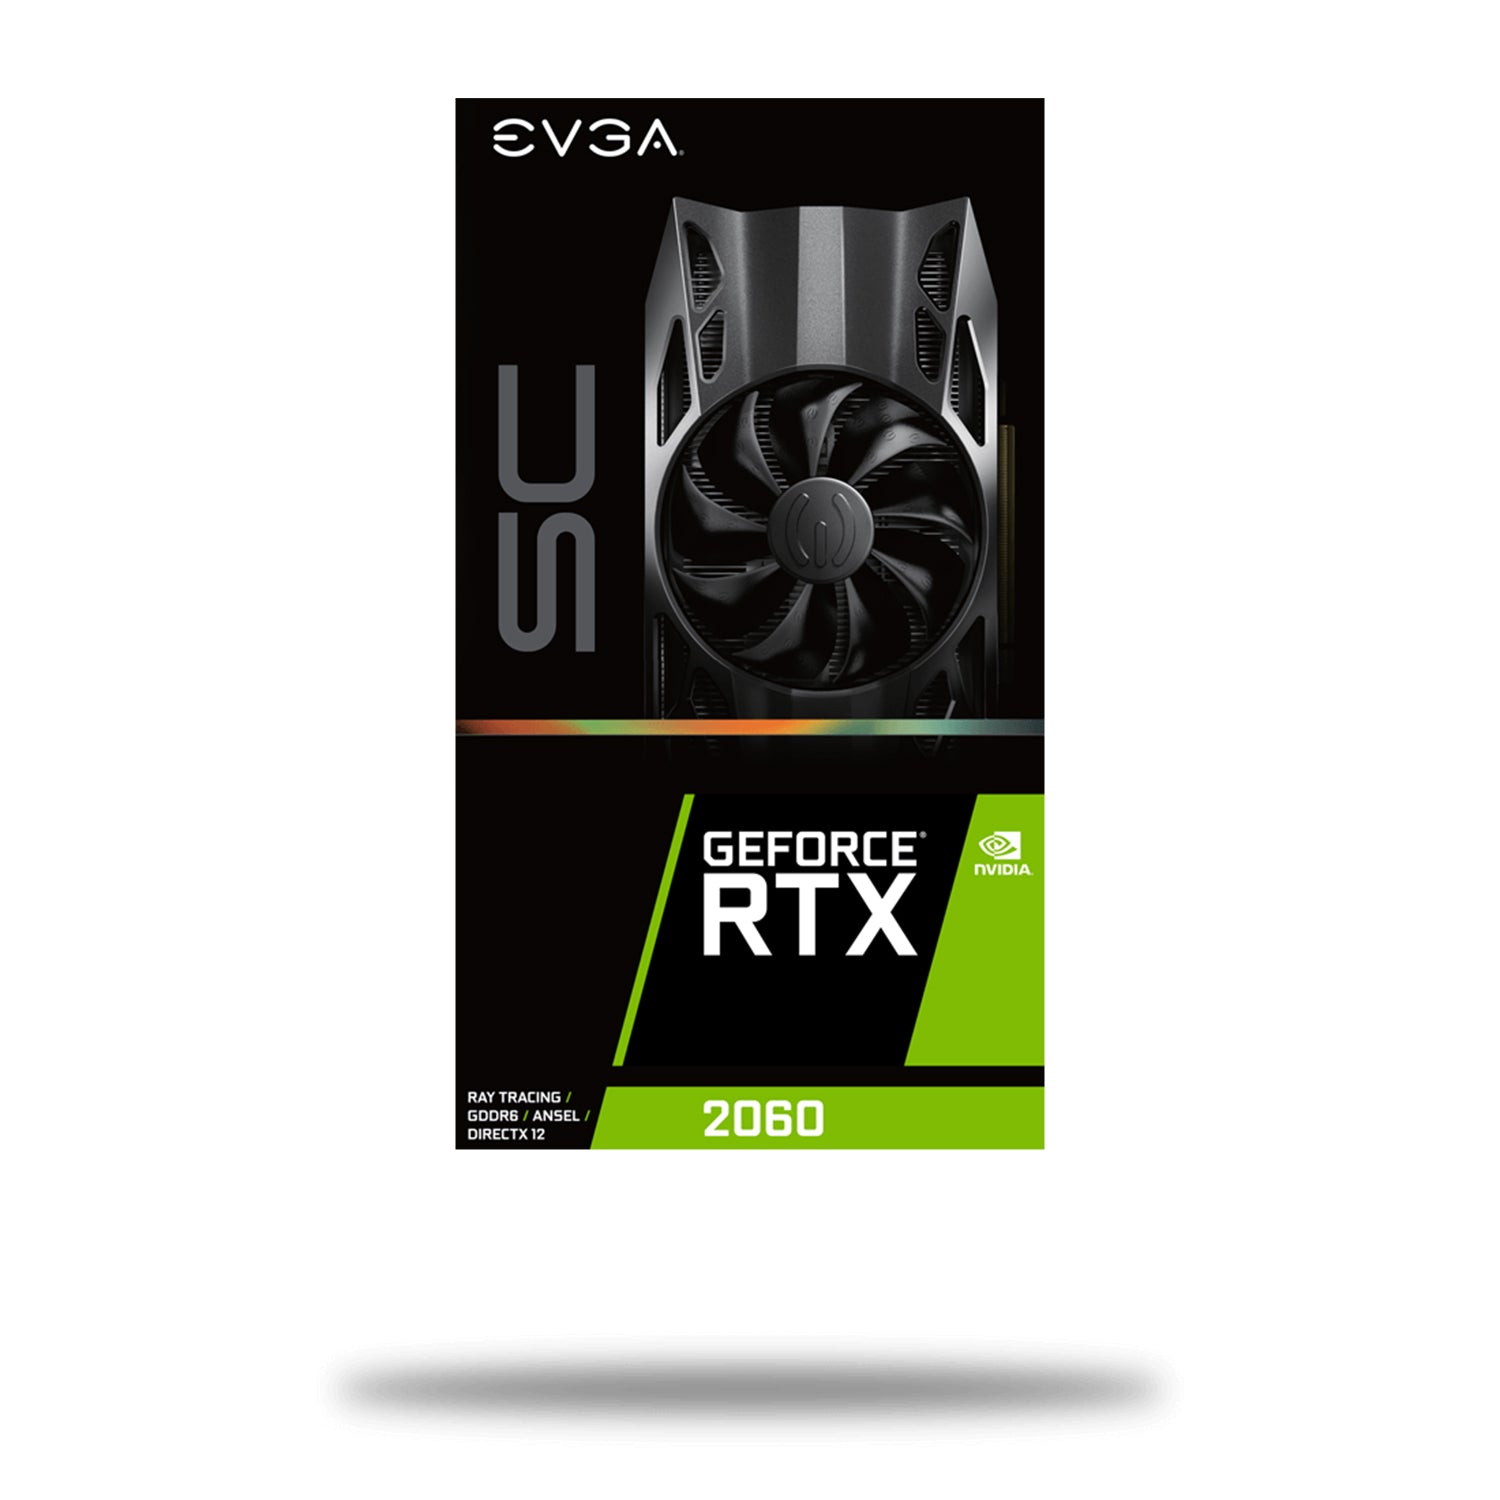 EVGA GeForce RTX 2060 Graphics card - 6GB GDDR6, PCIe 3.0 Video card, 1710 MHz Boost clock, Display port, HDMI, DVI-D (06G-P4-2062-KR)